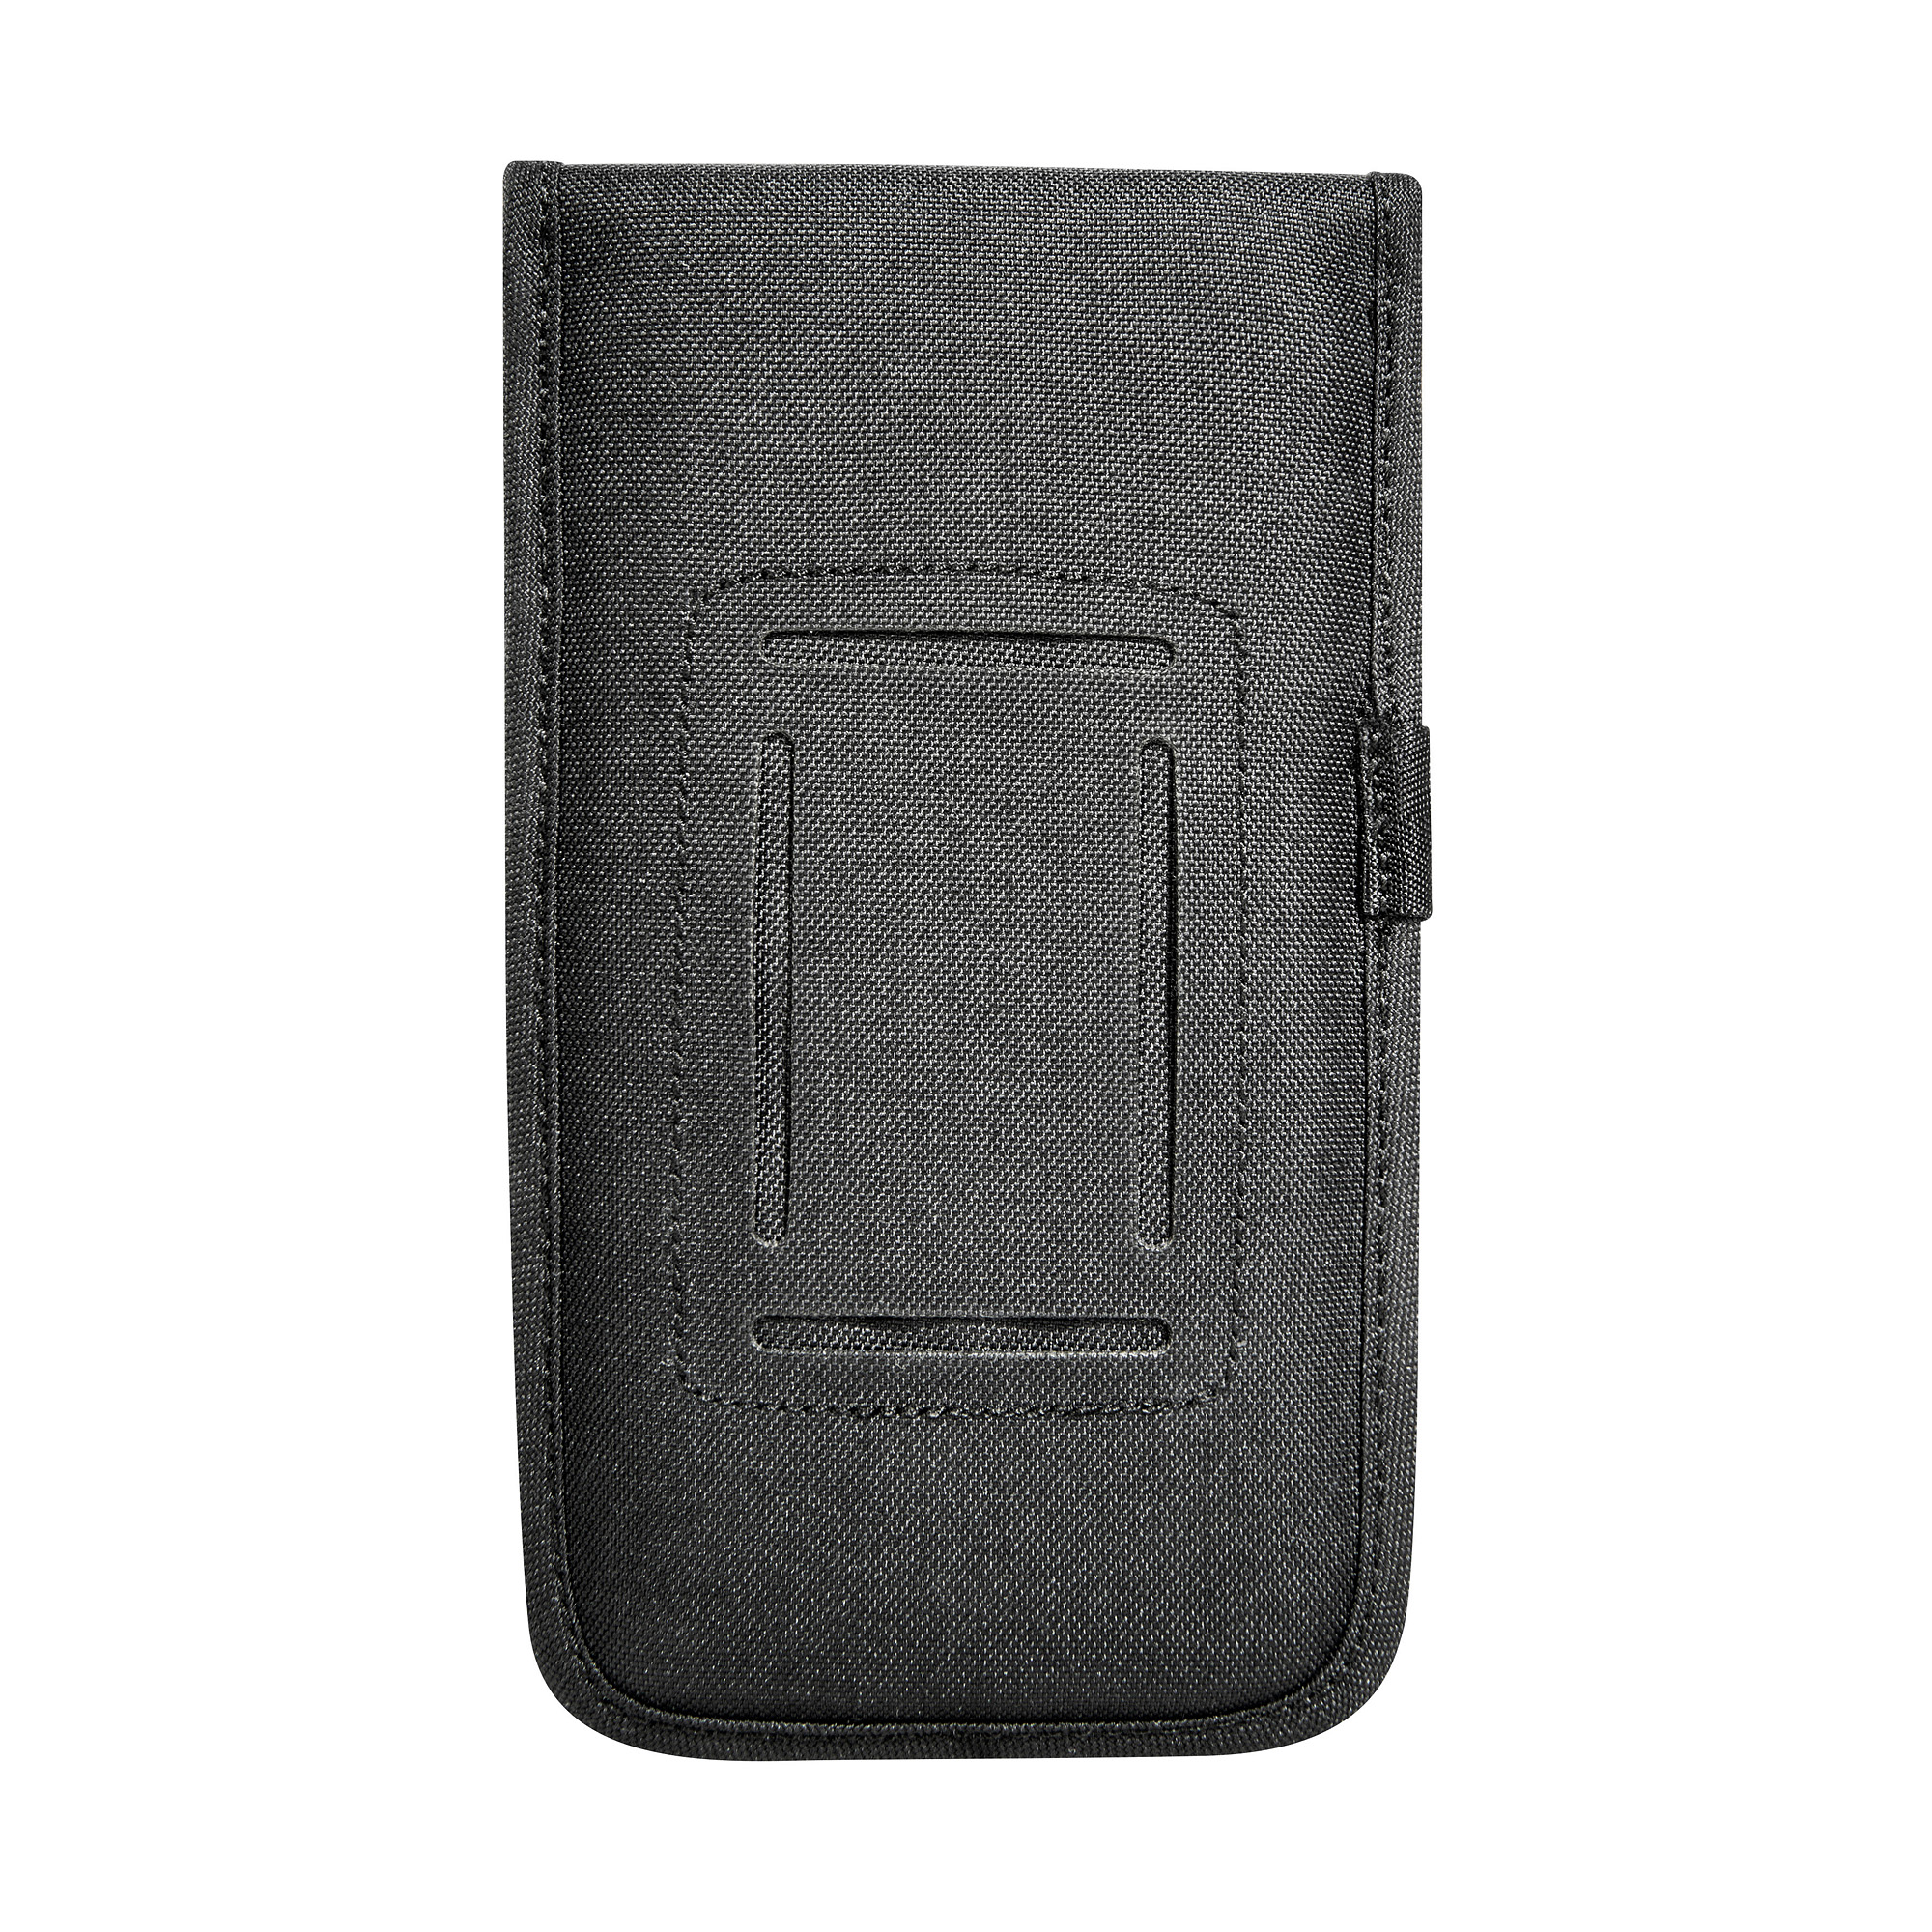 Tatonka Smartphone Case L off black schwarz Handyhüllen 4013236336054